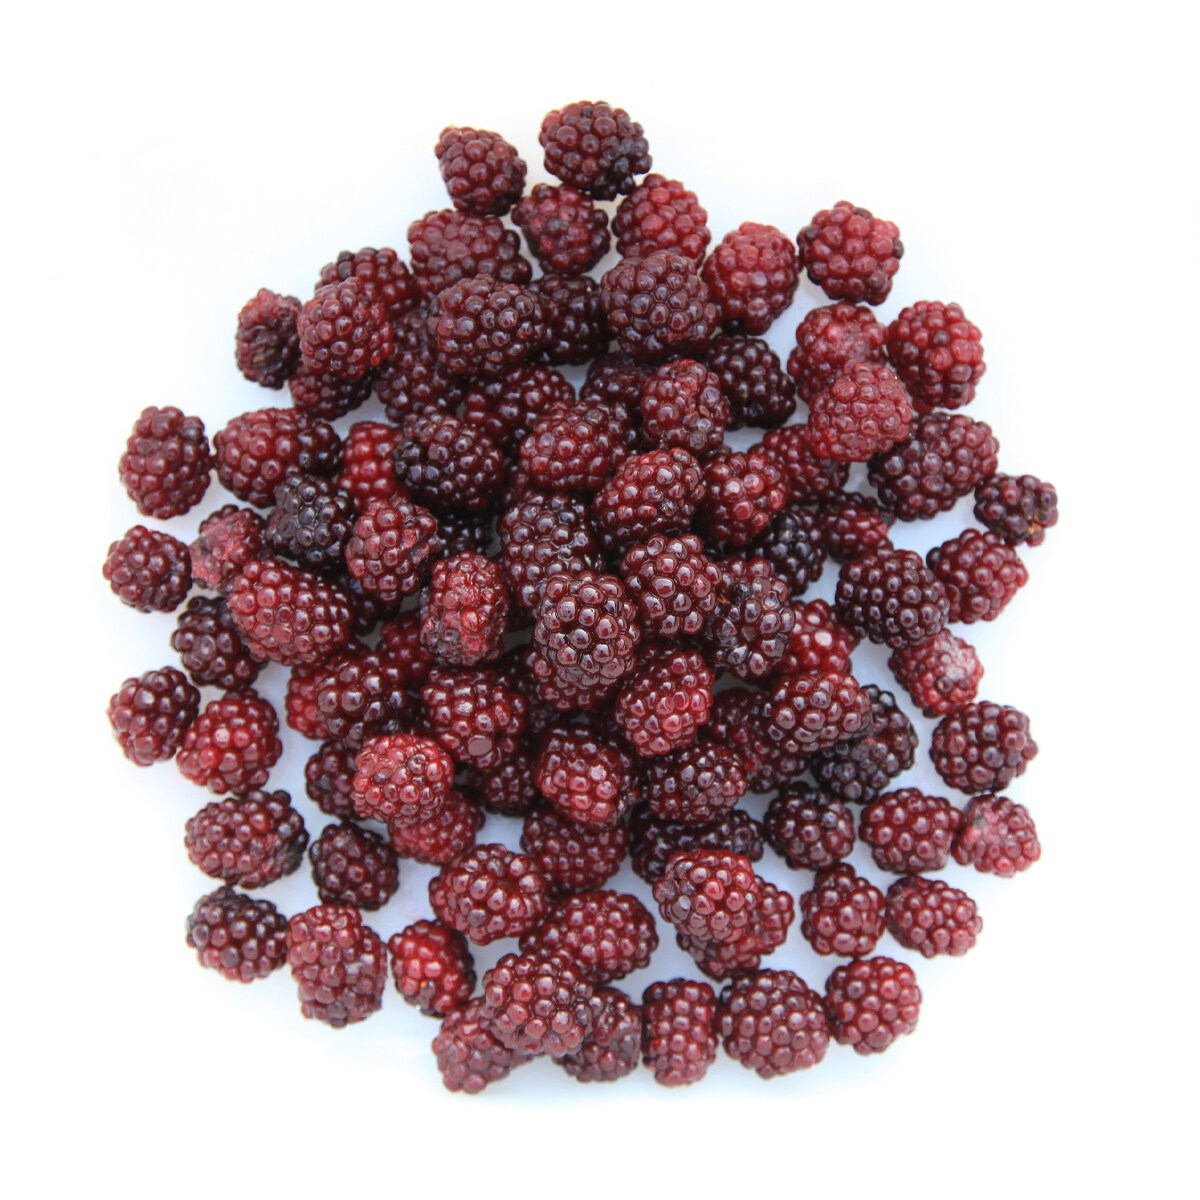 高质量的散装冷冻水果黑莓价格每吨